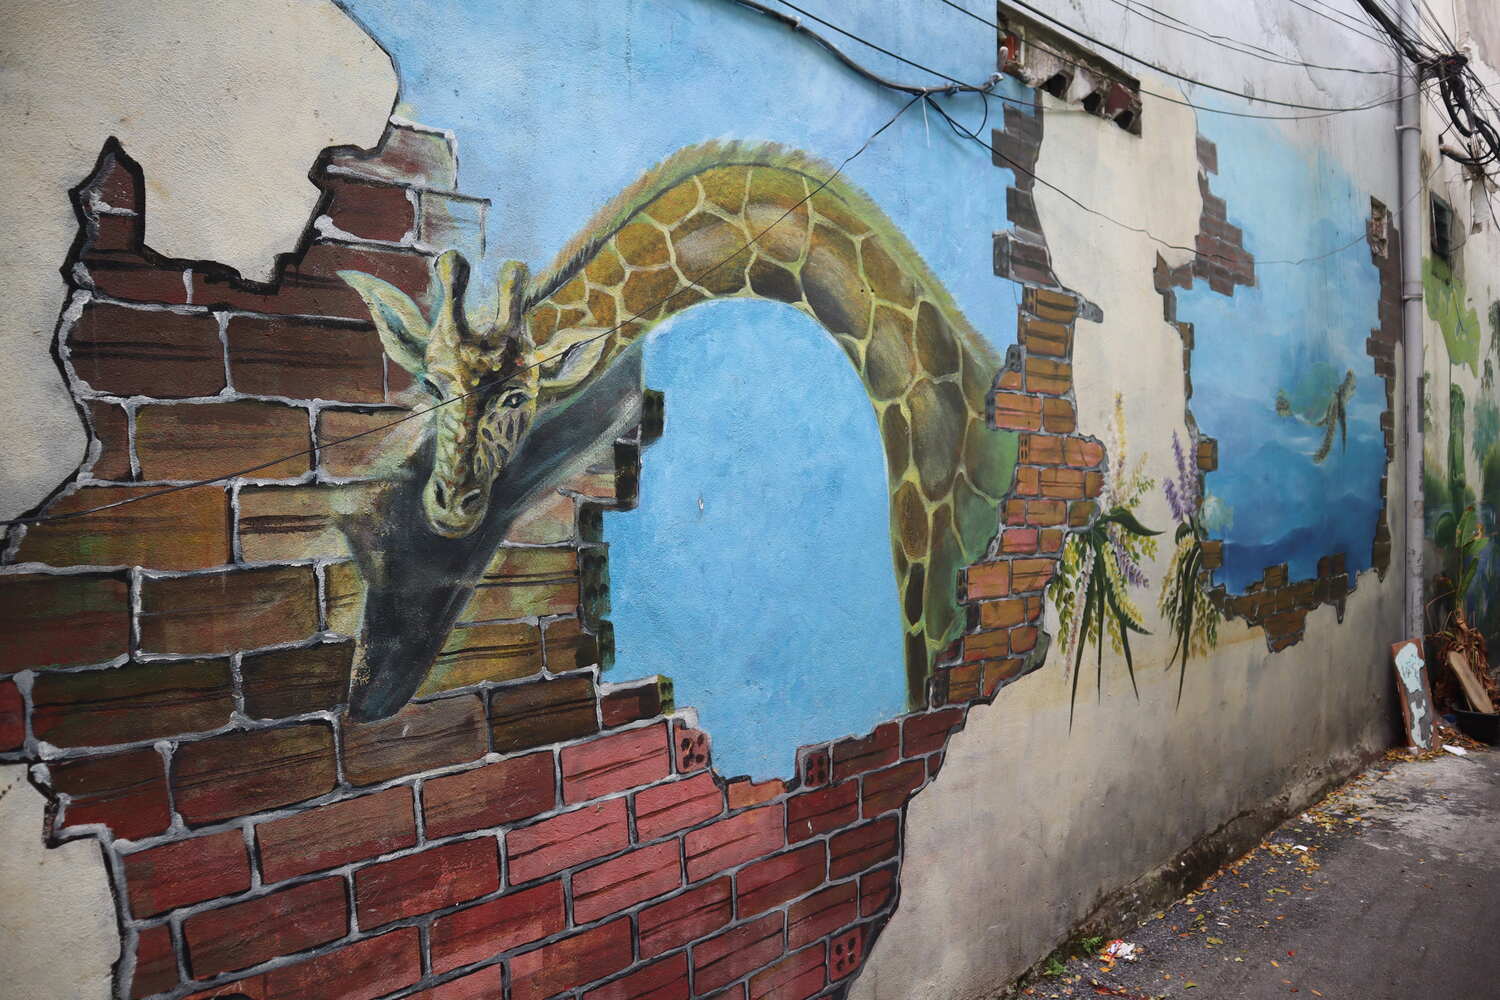 Giraffe graffiti at Da Nang Fresco Village